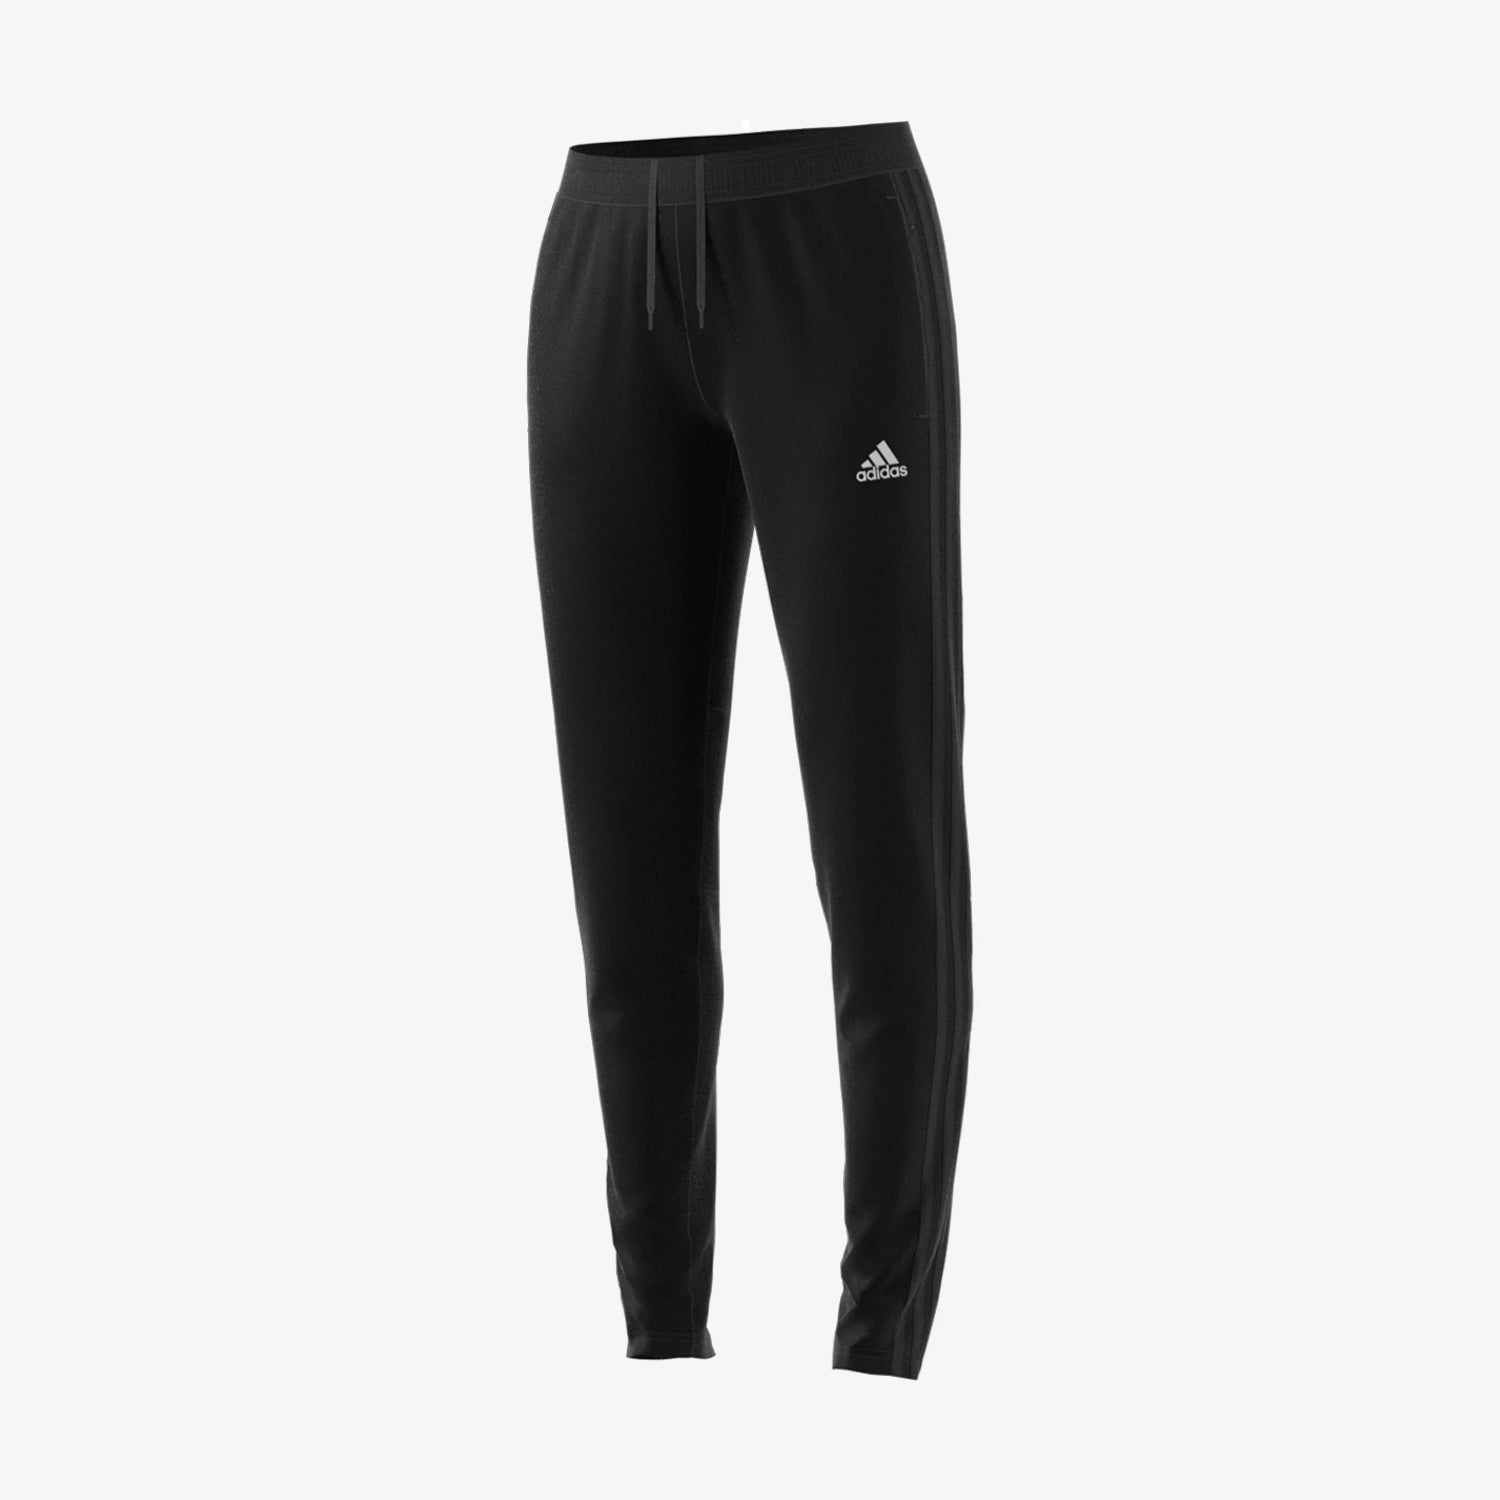 Adidas Womens Soccer Tiro 17 Training Pants WhiteBlack